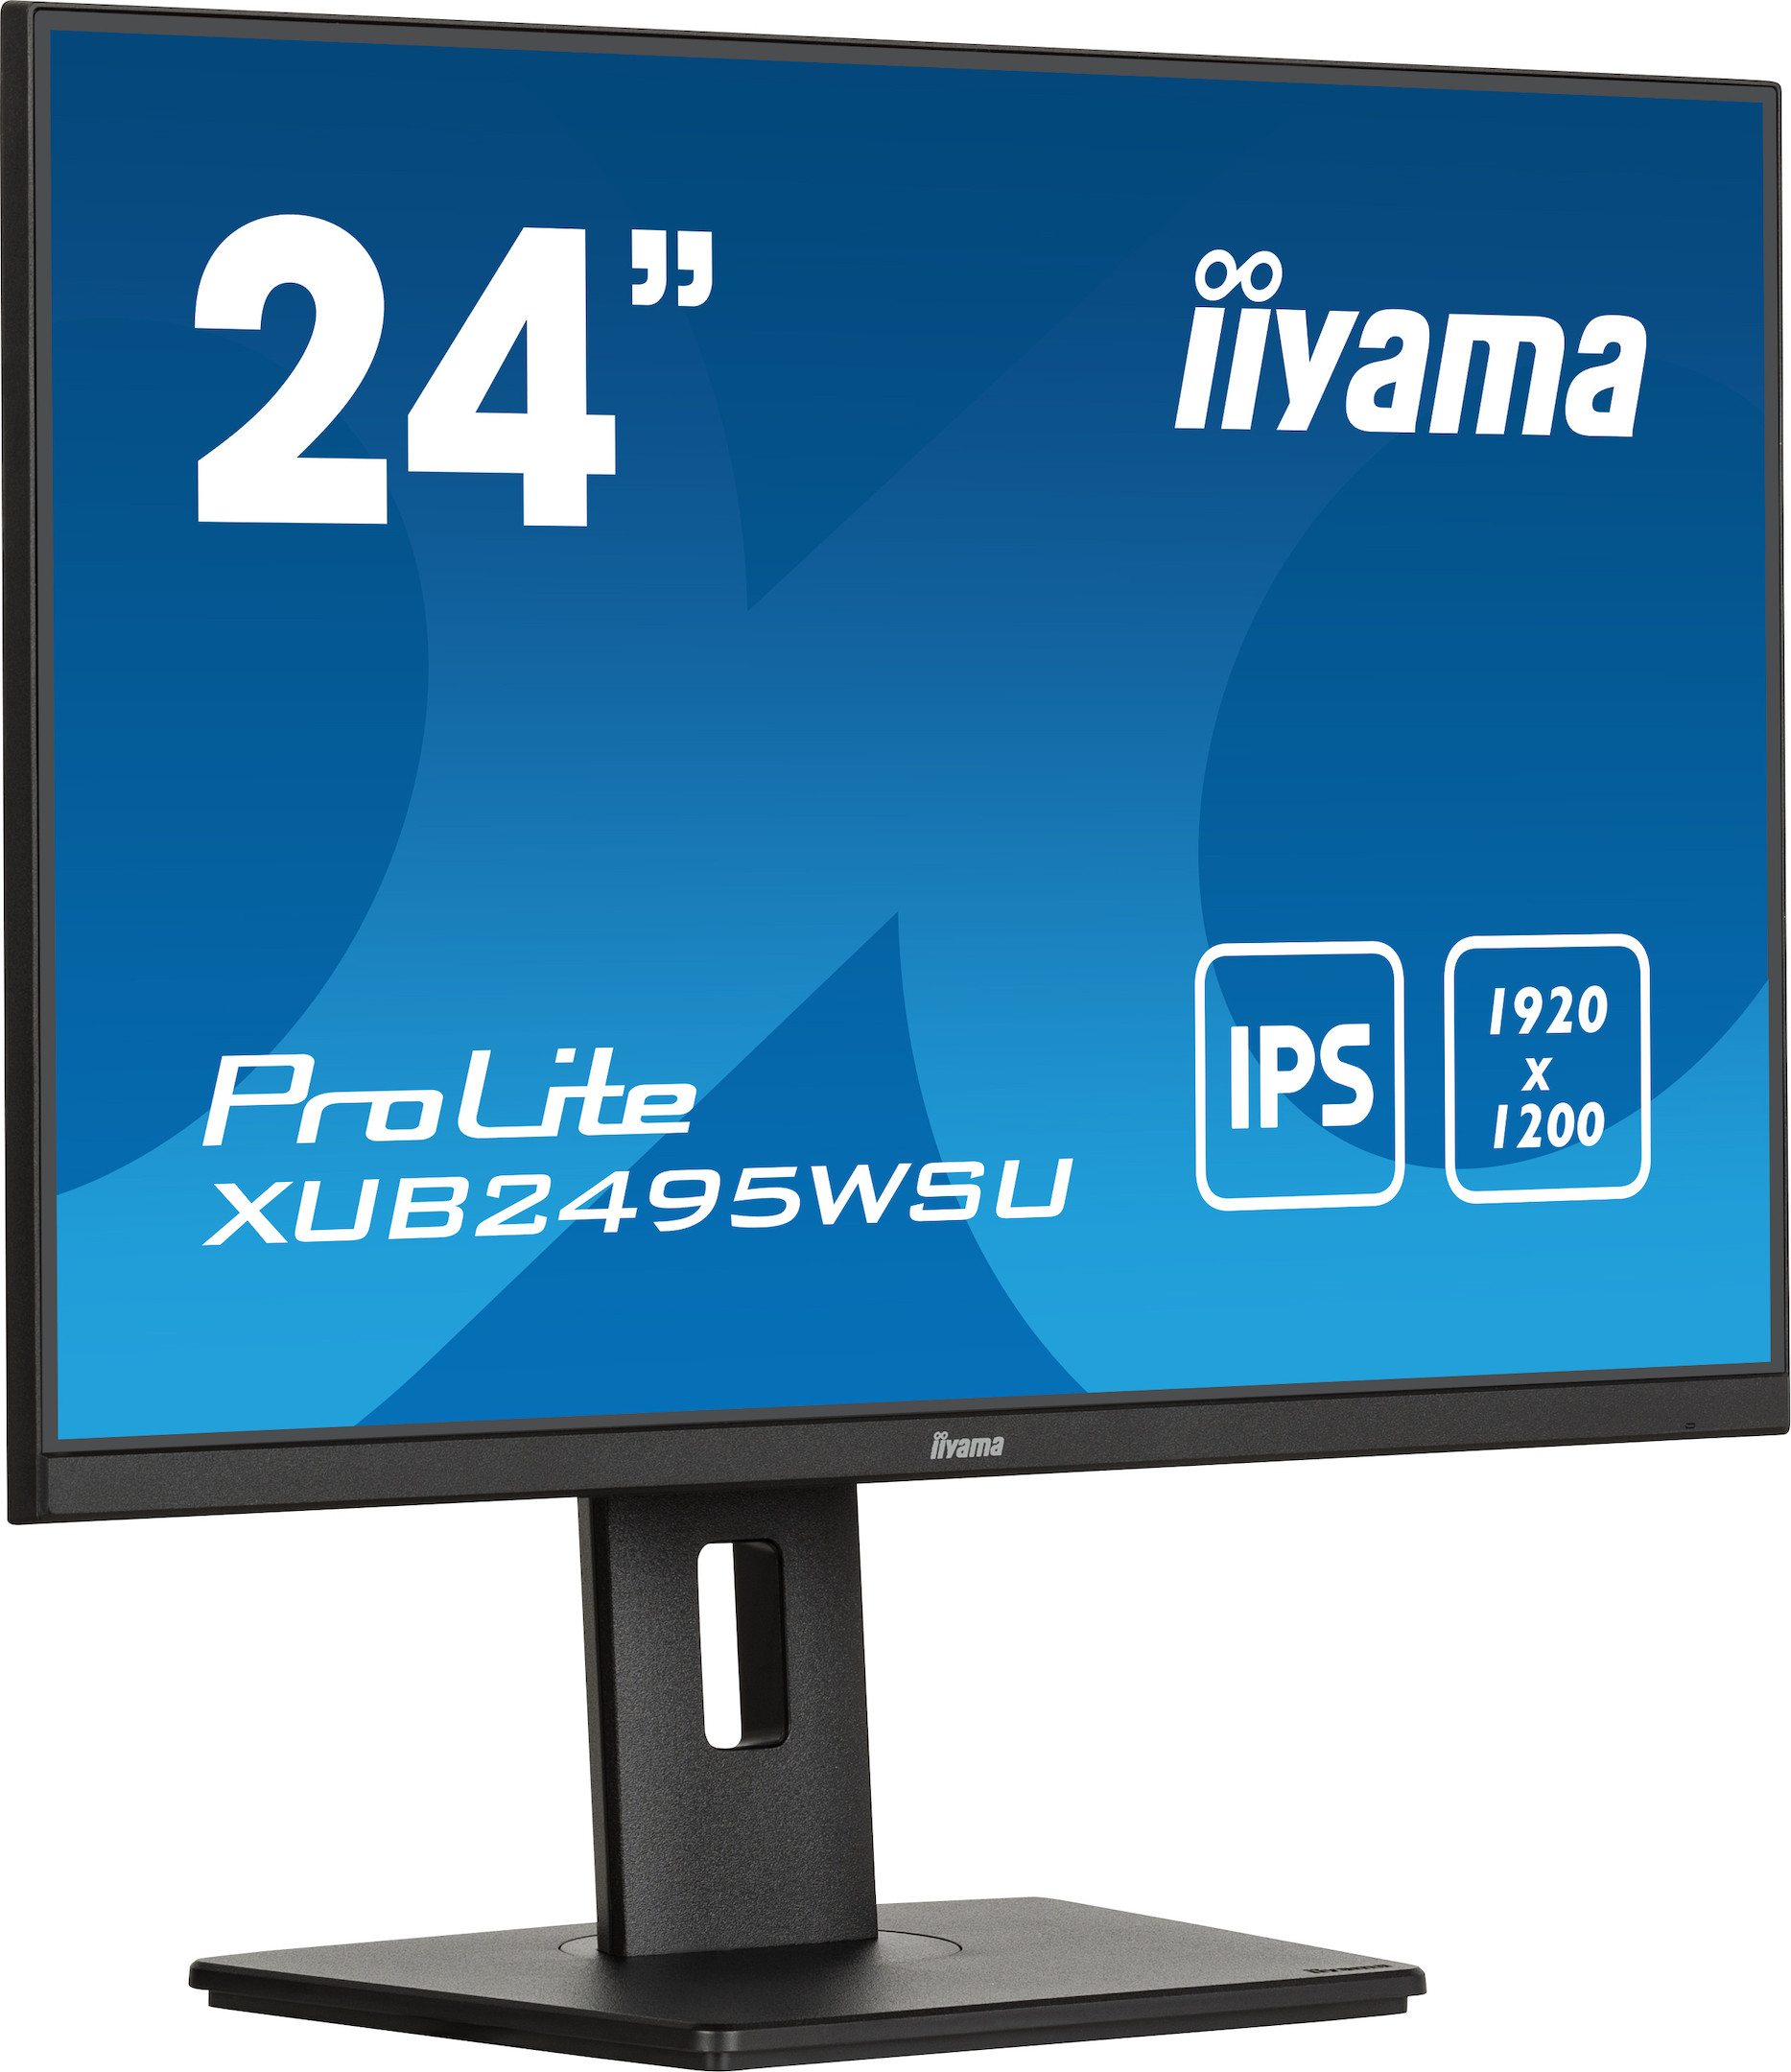 iiyama-PROLITE-XUB2495WSU-B7